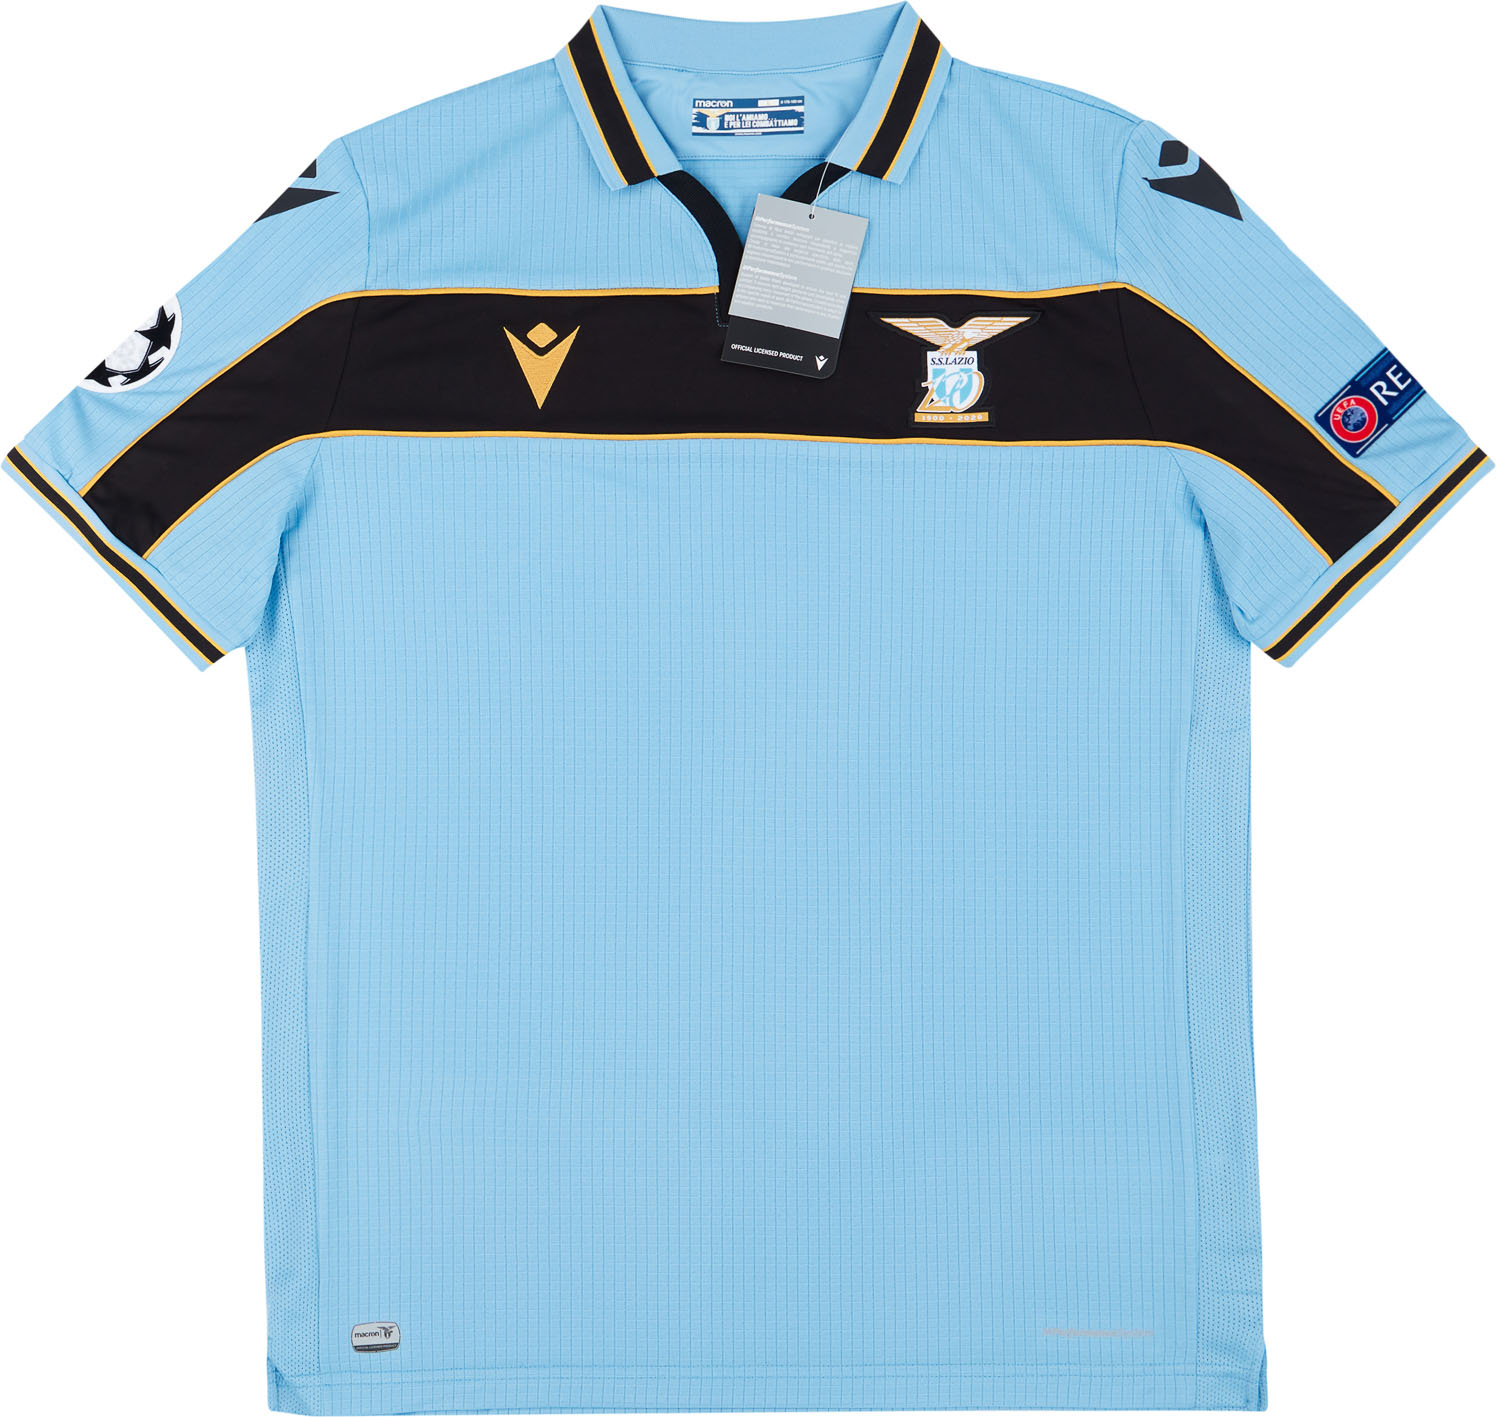 2020-21 Lazio Champions League Home Shirt - NEW